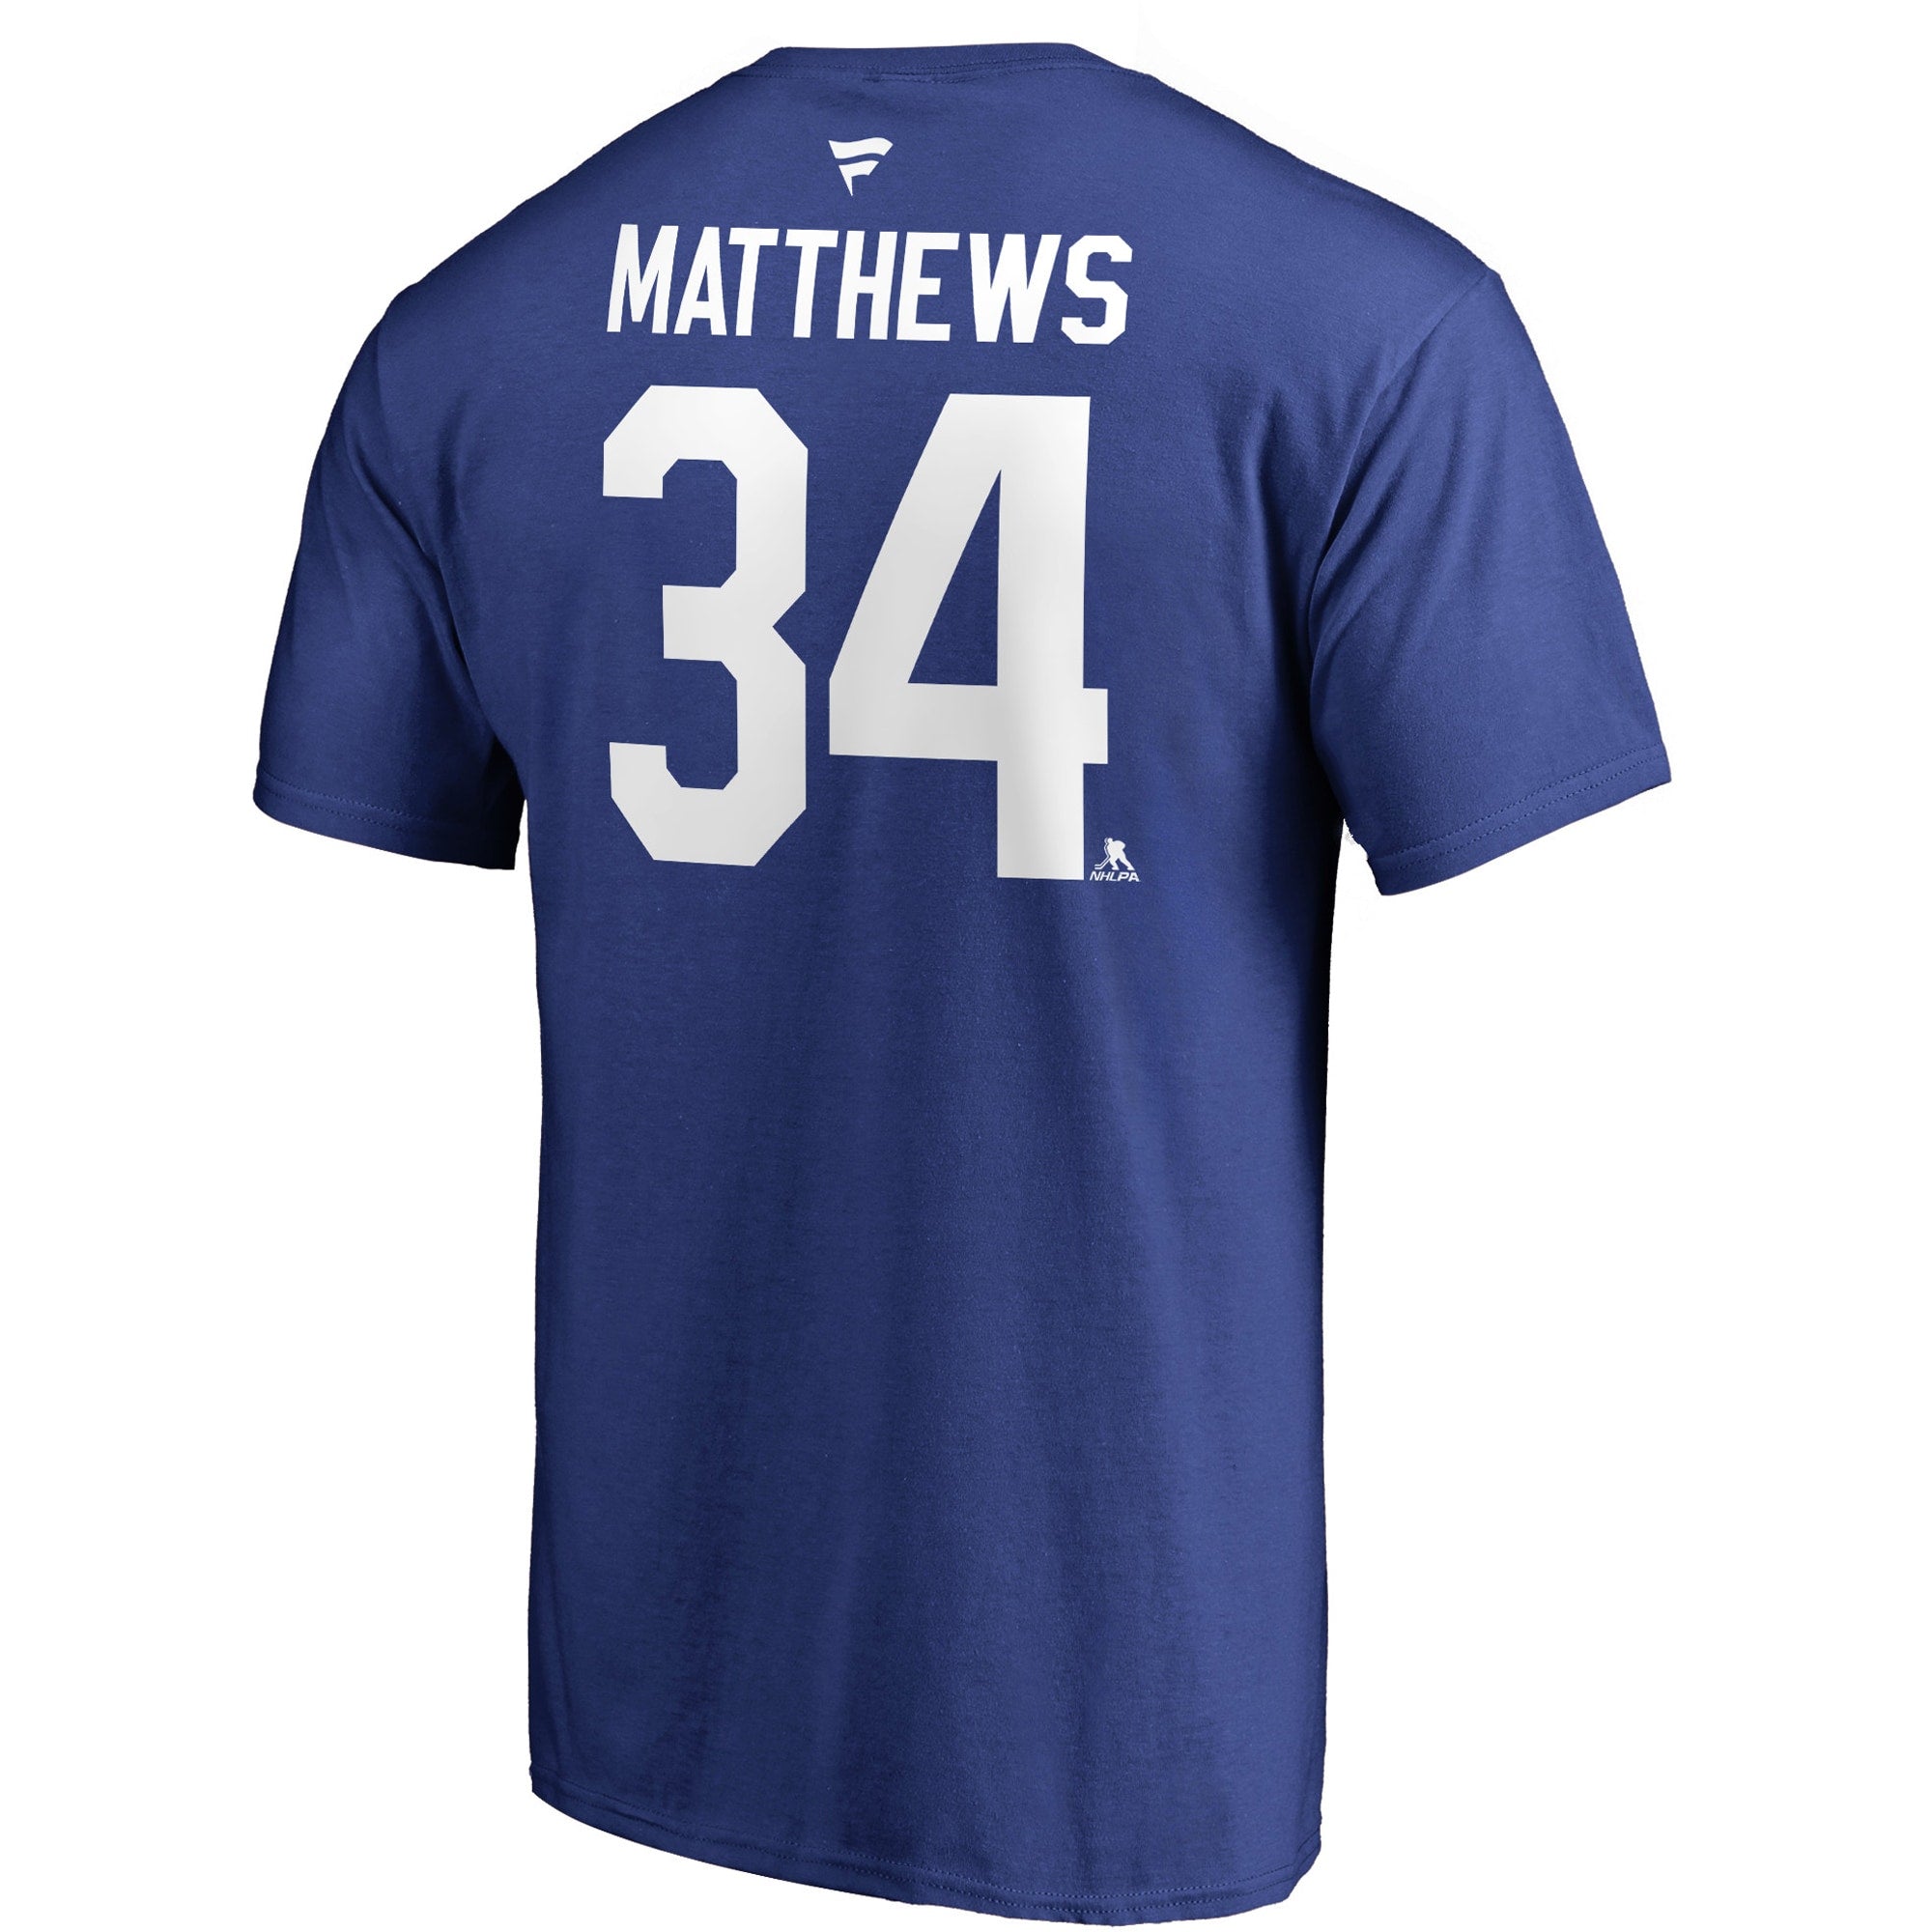 Auston Matthews Signed Toronto Maple Leafs Fanatics Home Jersey